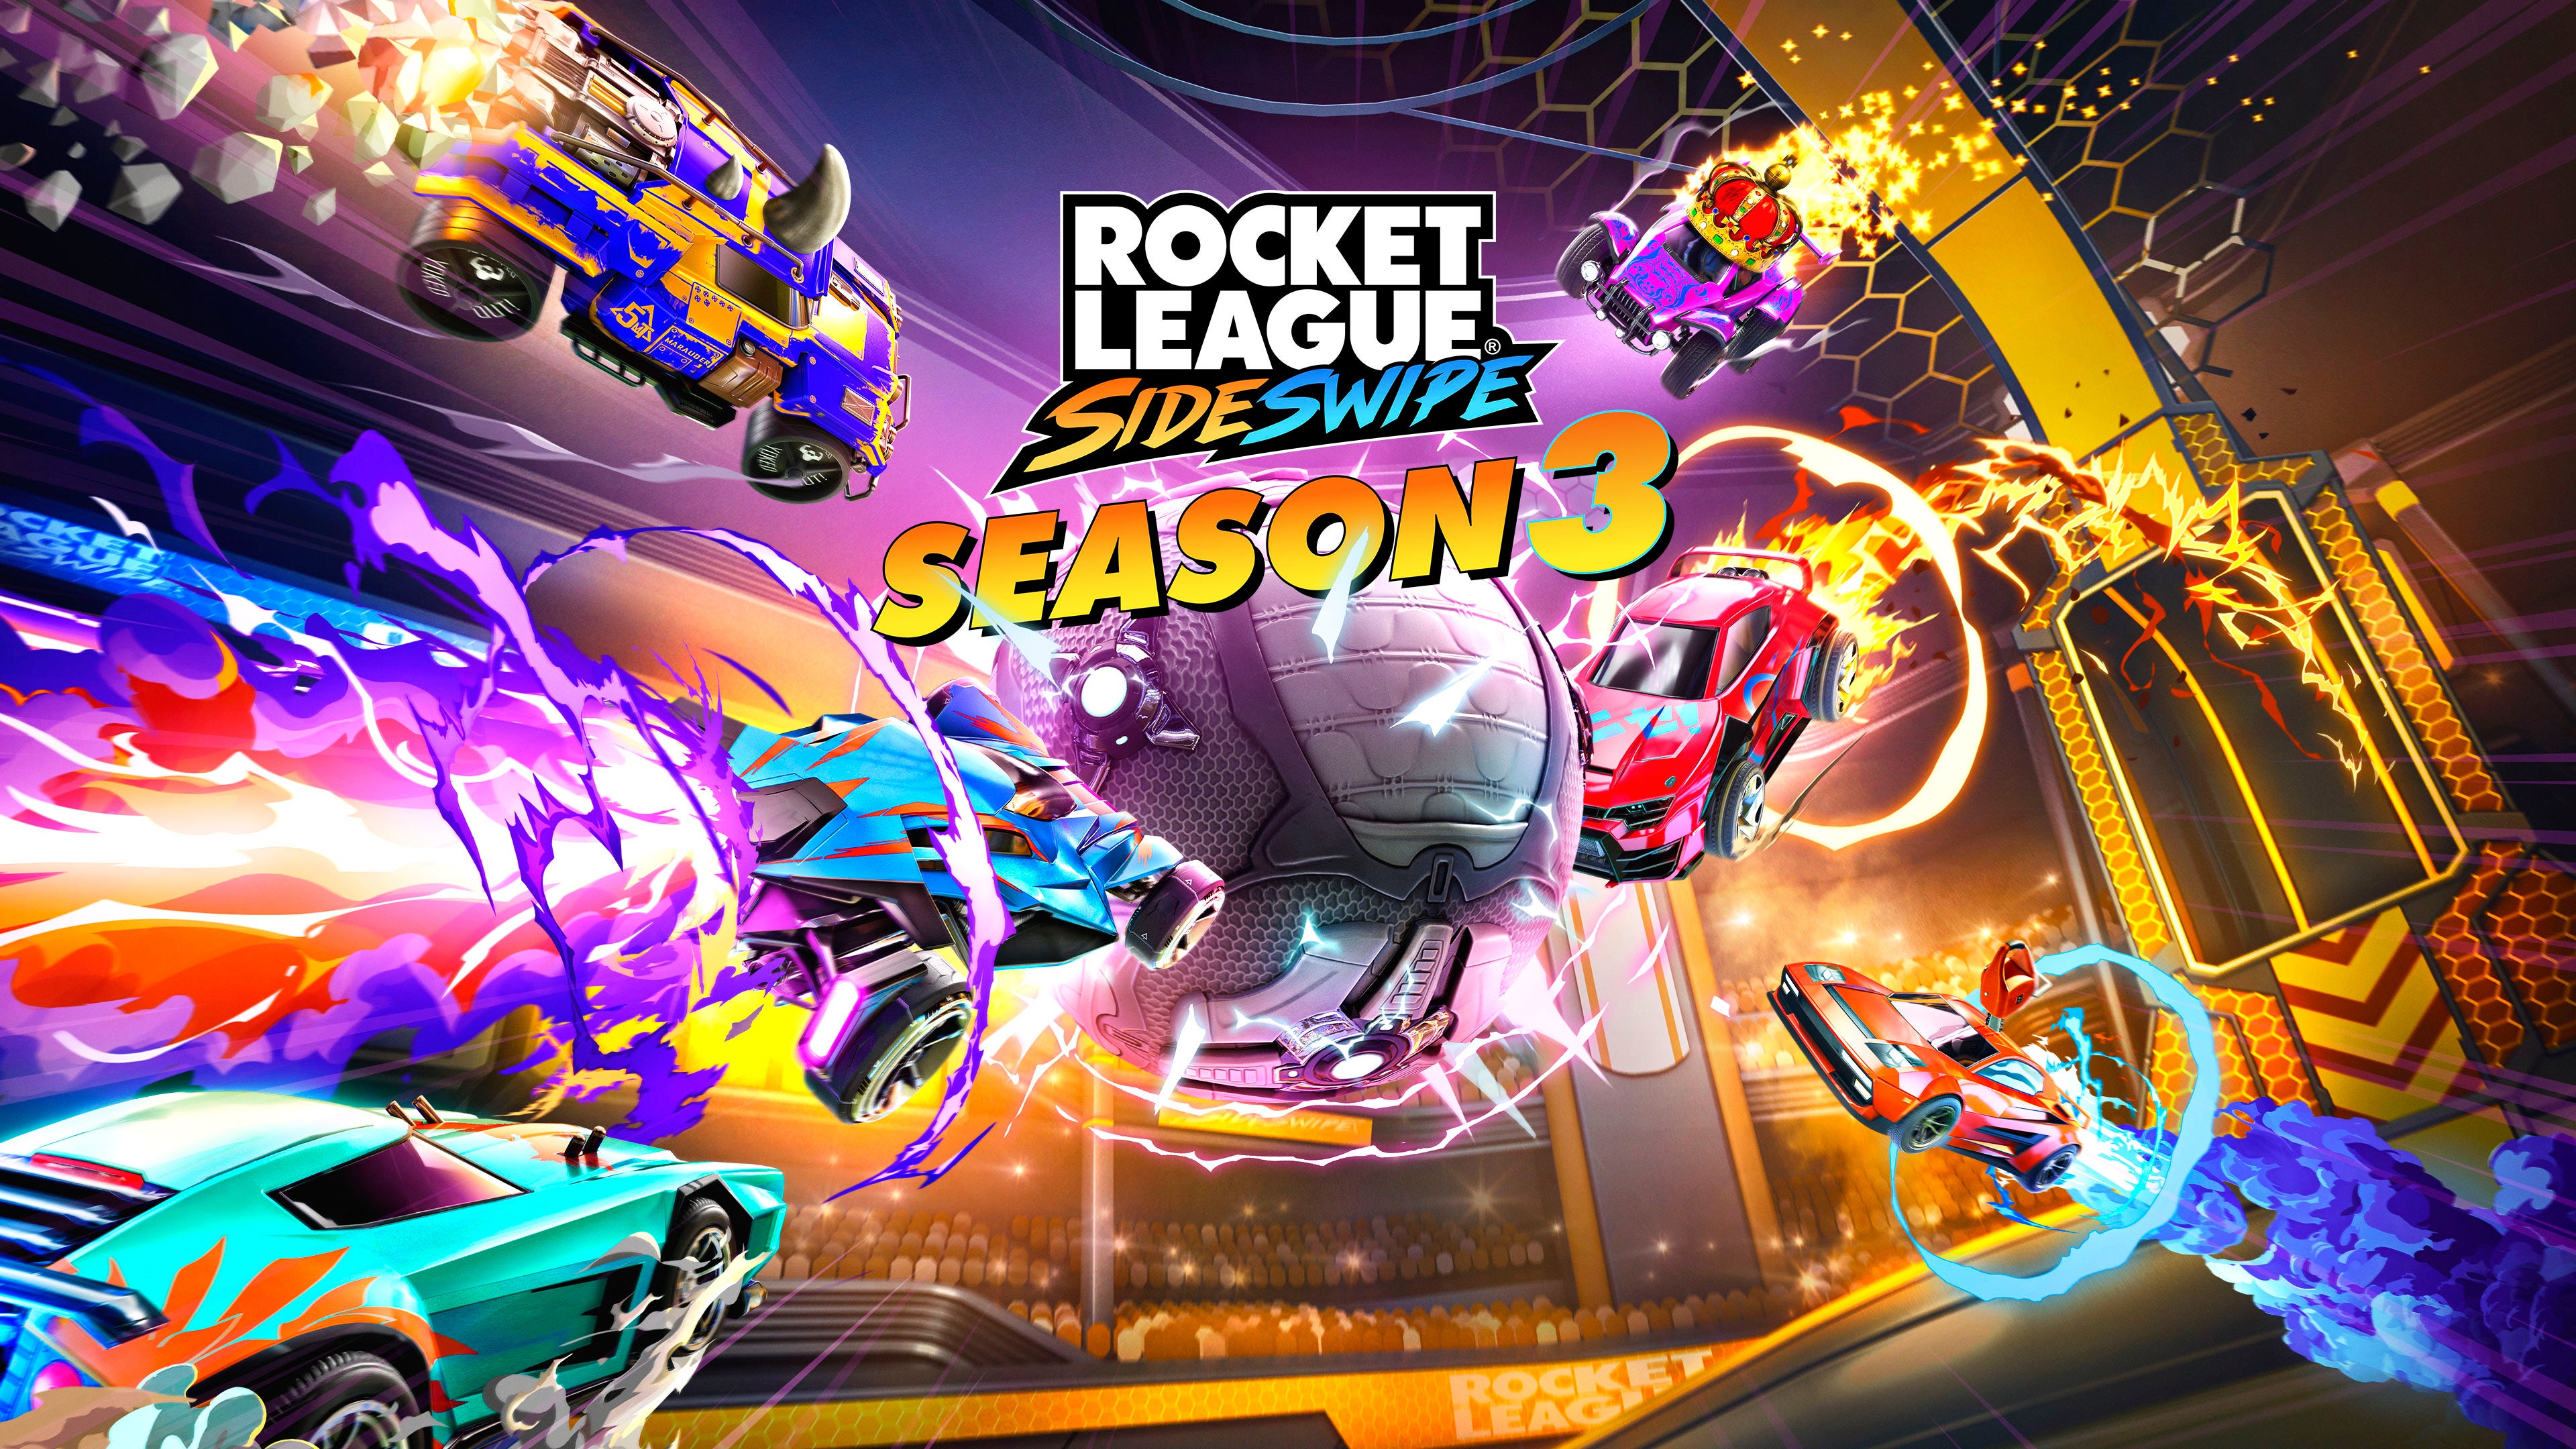 Image for Rocket League Sideswipe Season 3 has gone live, bringing threes and spectator modes